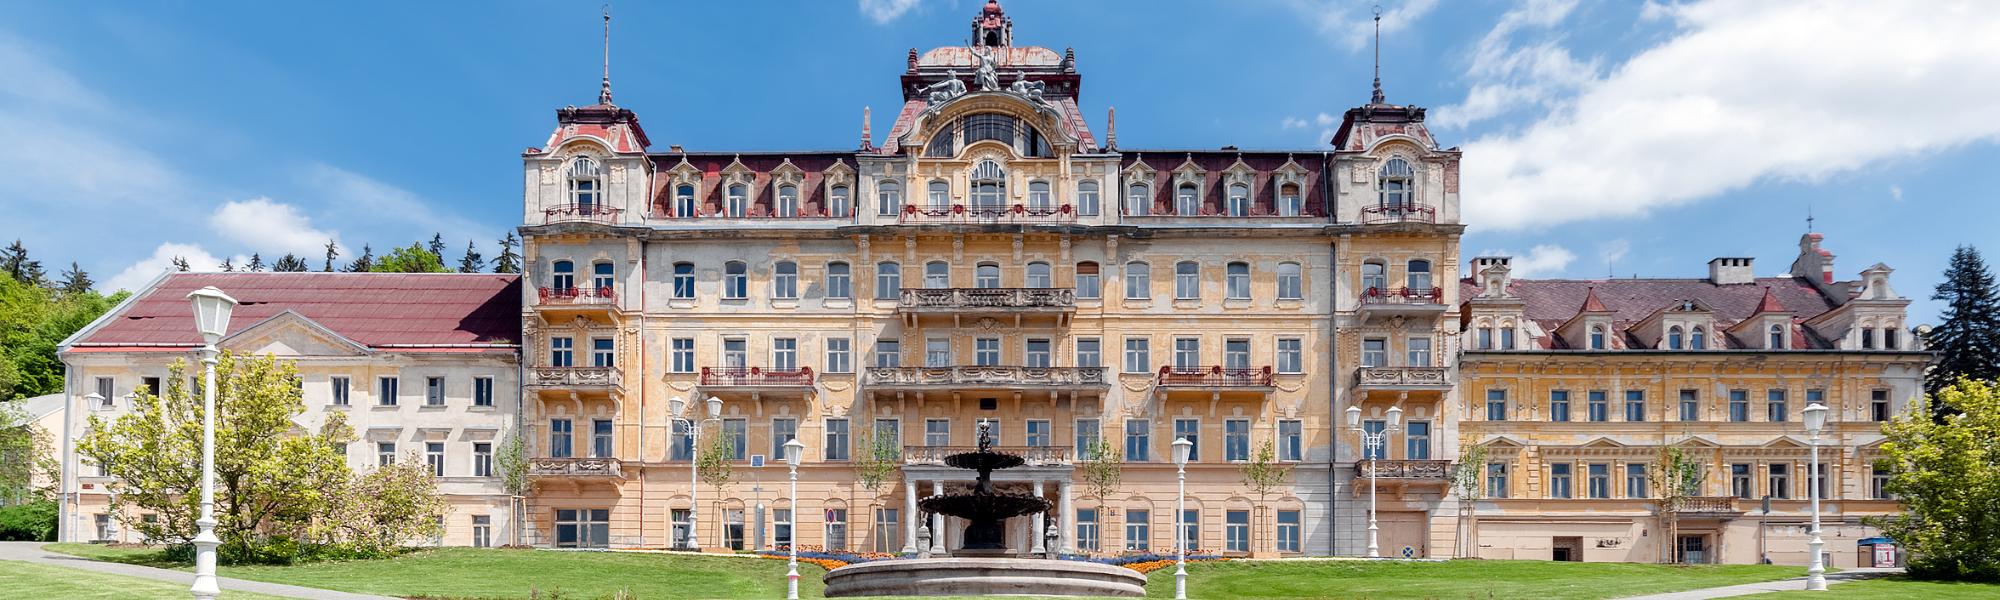 Historic Properties Czechia - PRAGA1 REALPORTICO